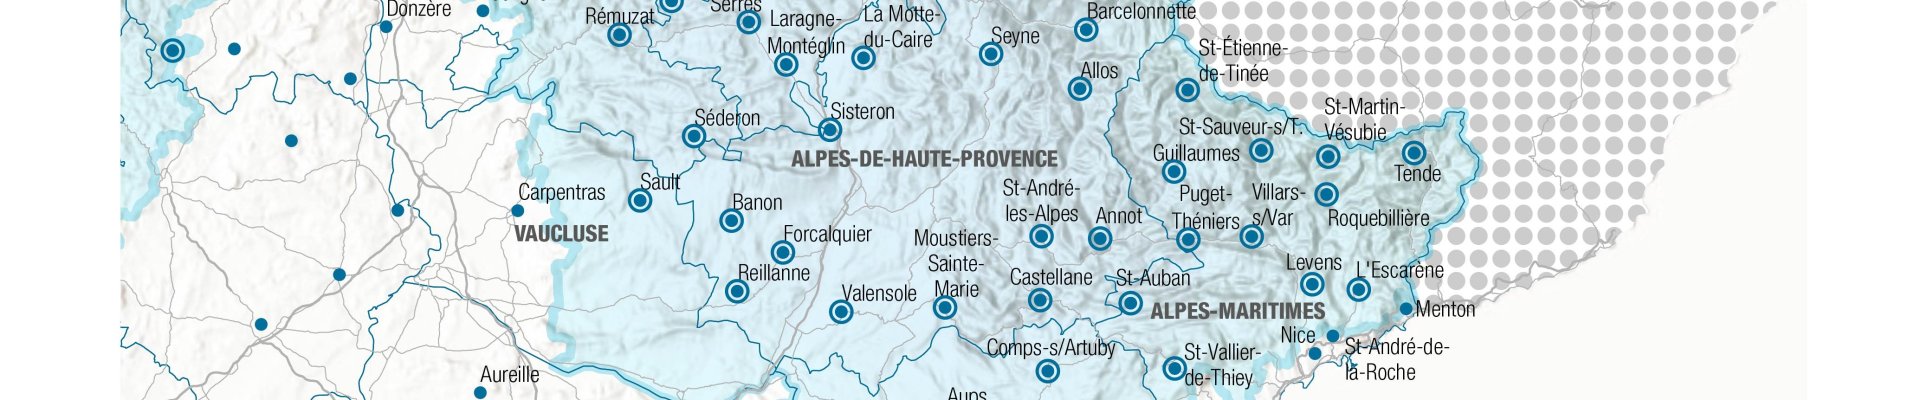 Labo Alpin : Services, Territoires et Transitions